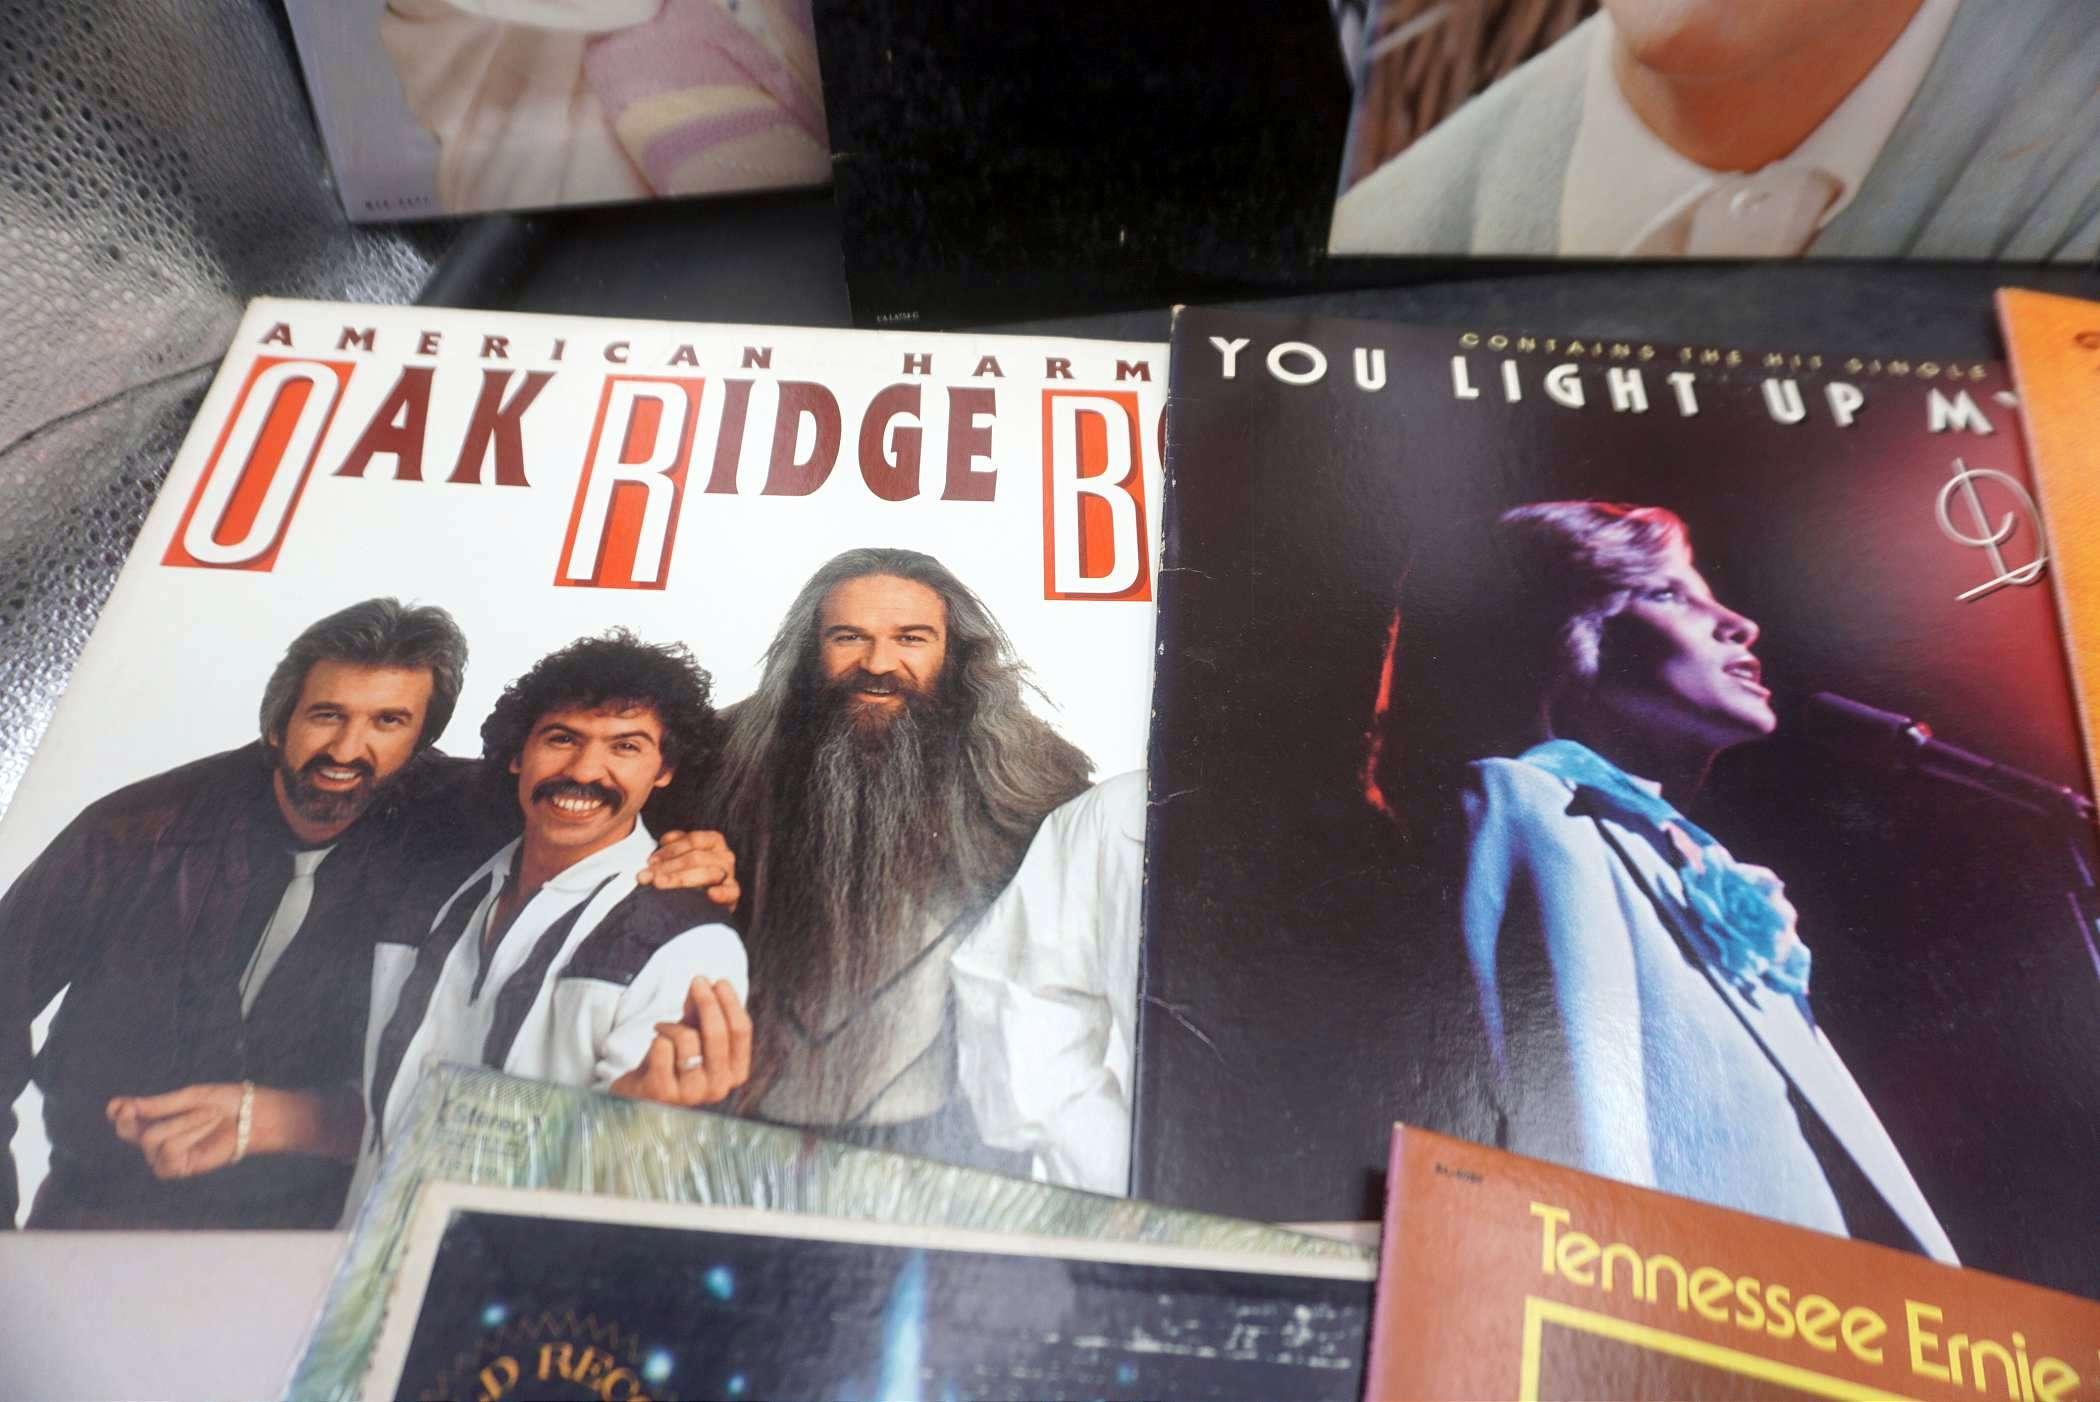 Records - Oak Ridge Boys, Richard Clayderman & More